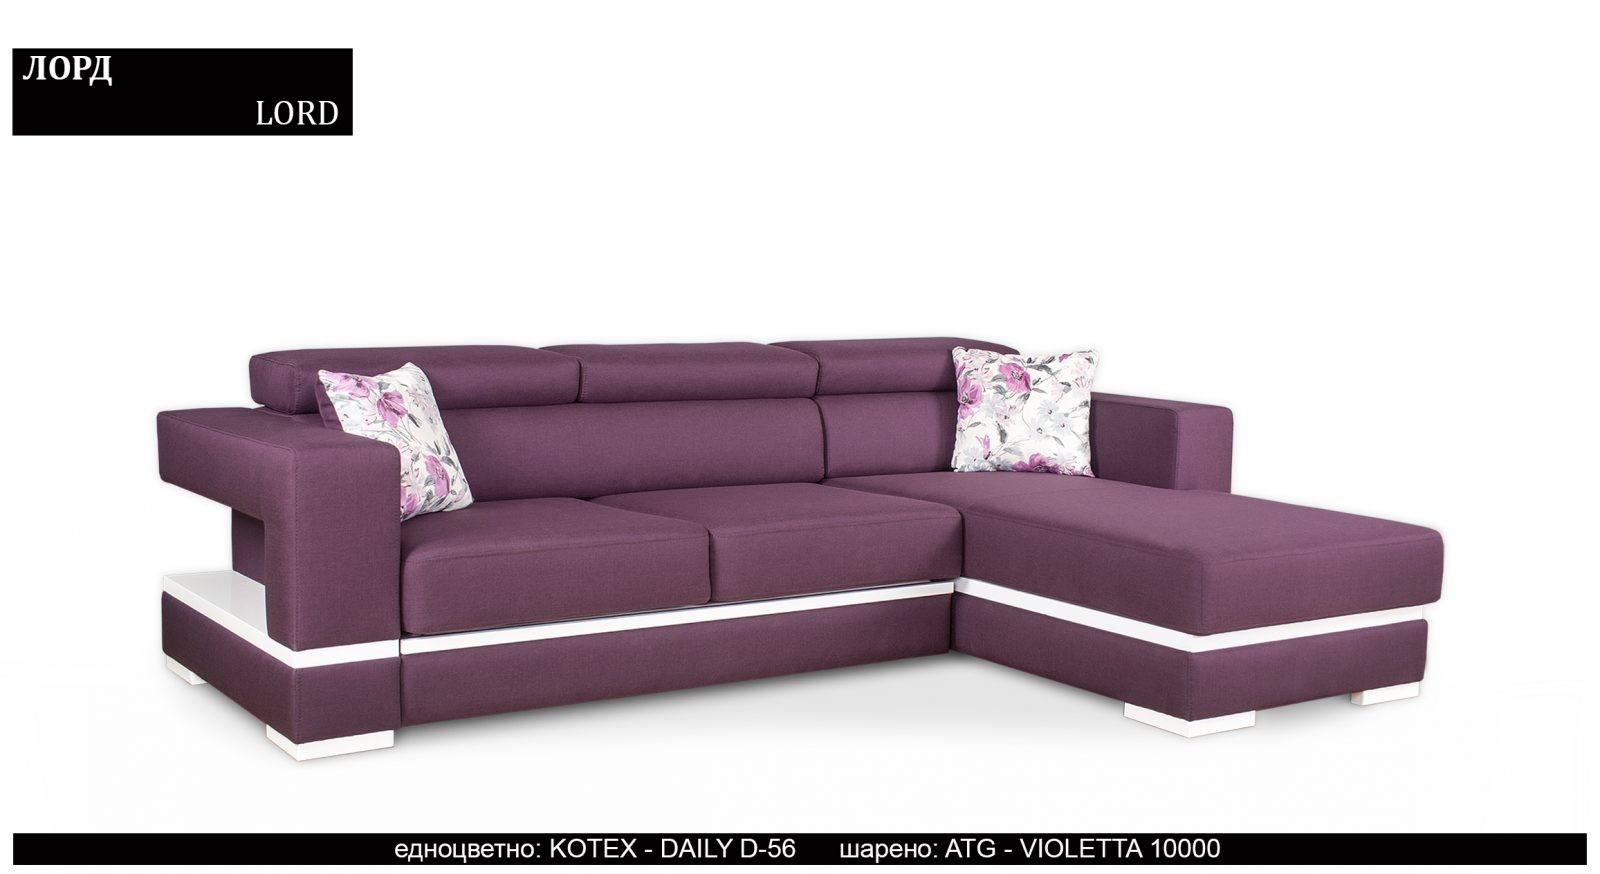 (Български) Луксозен  ъглов диван |”ЛОРД”| Руди-Ан